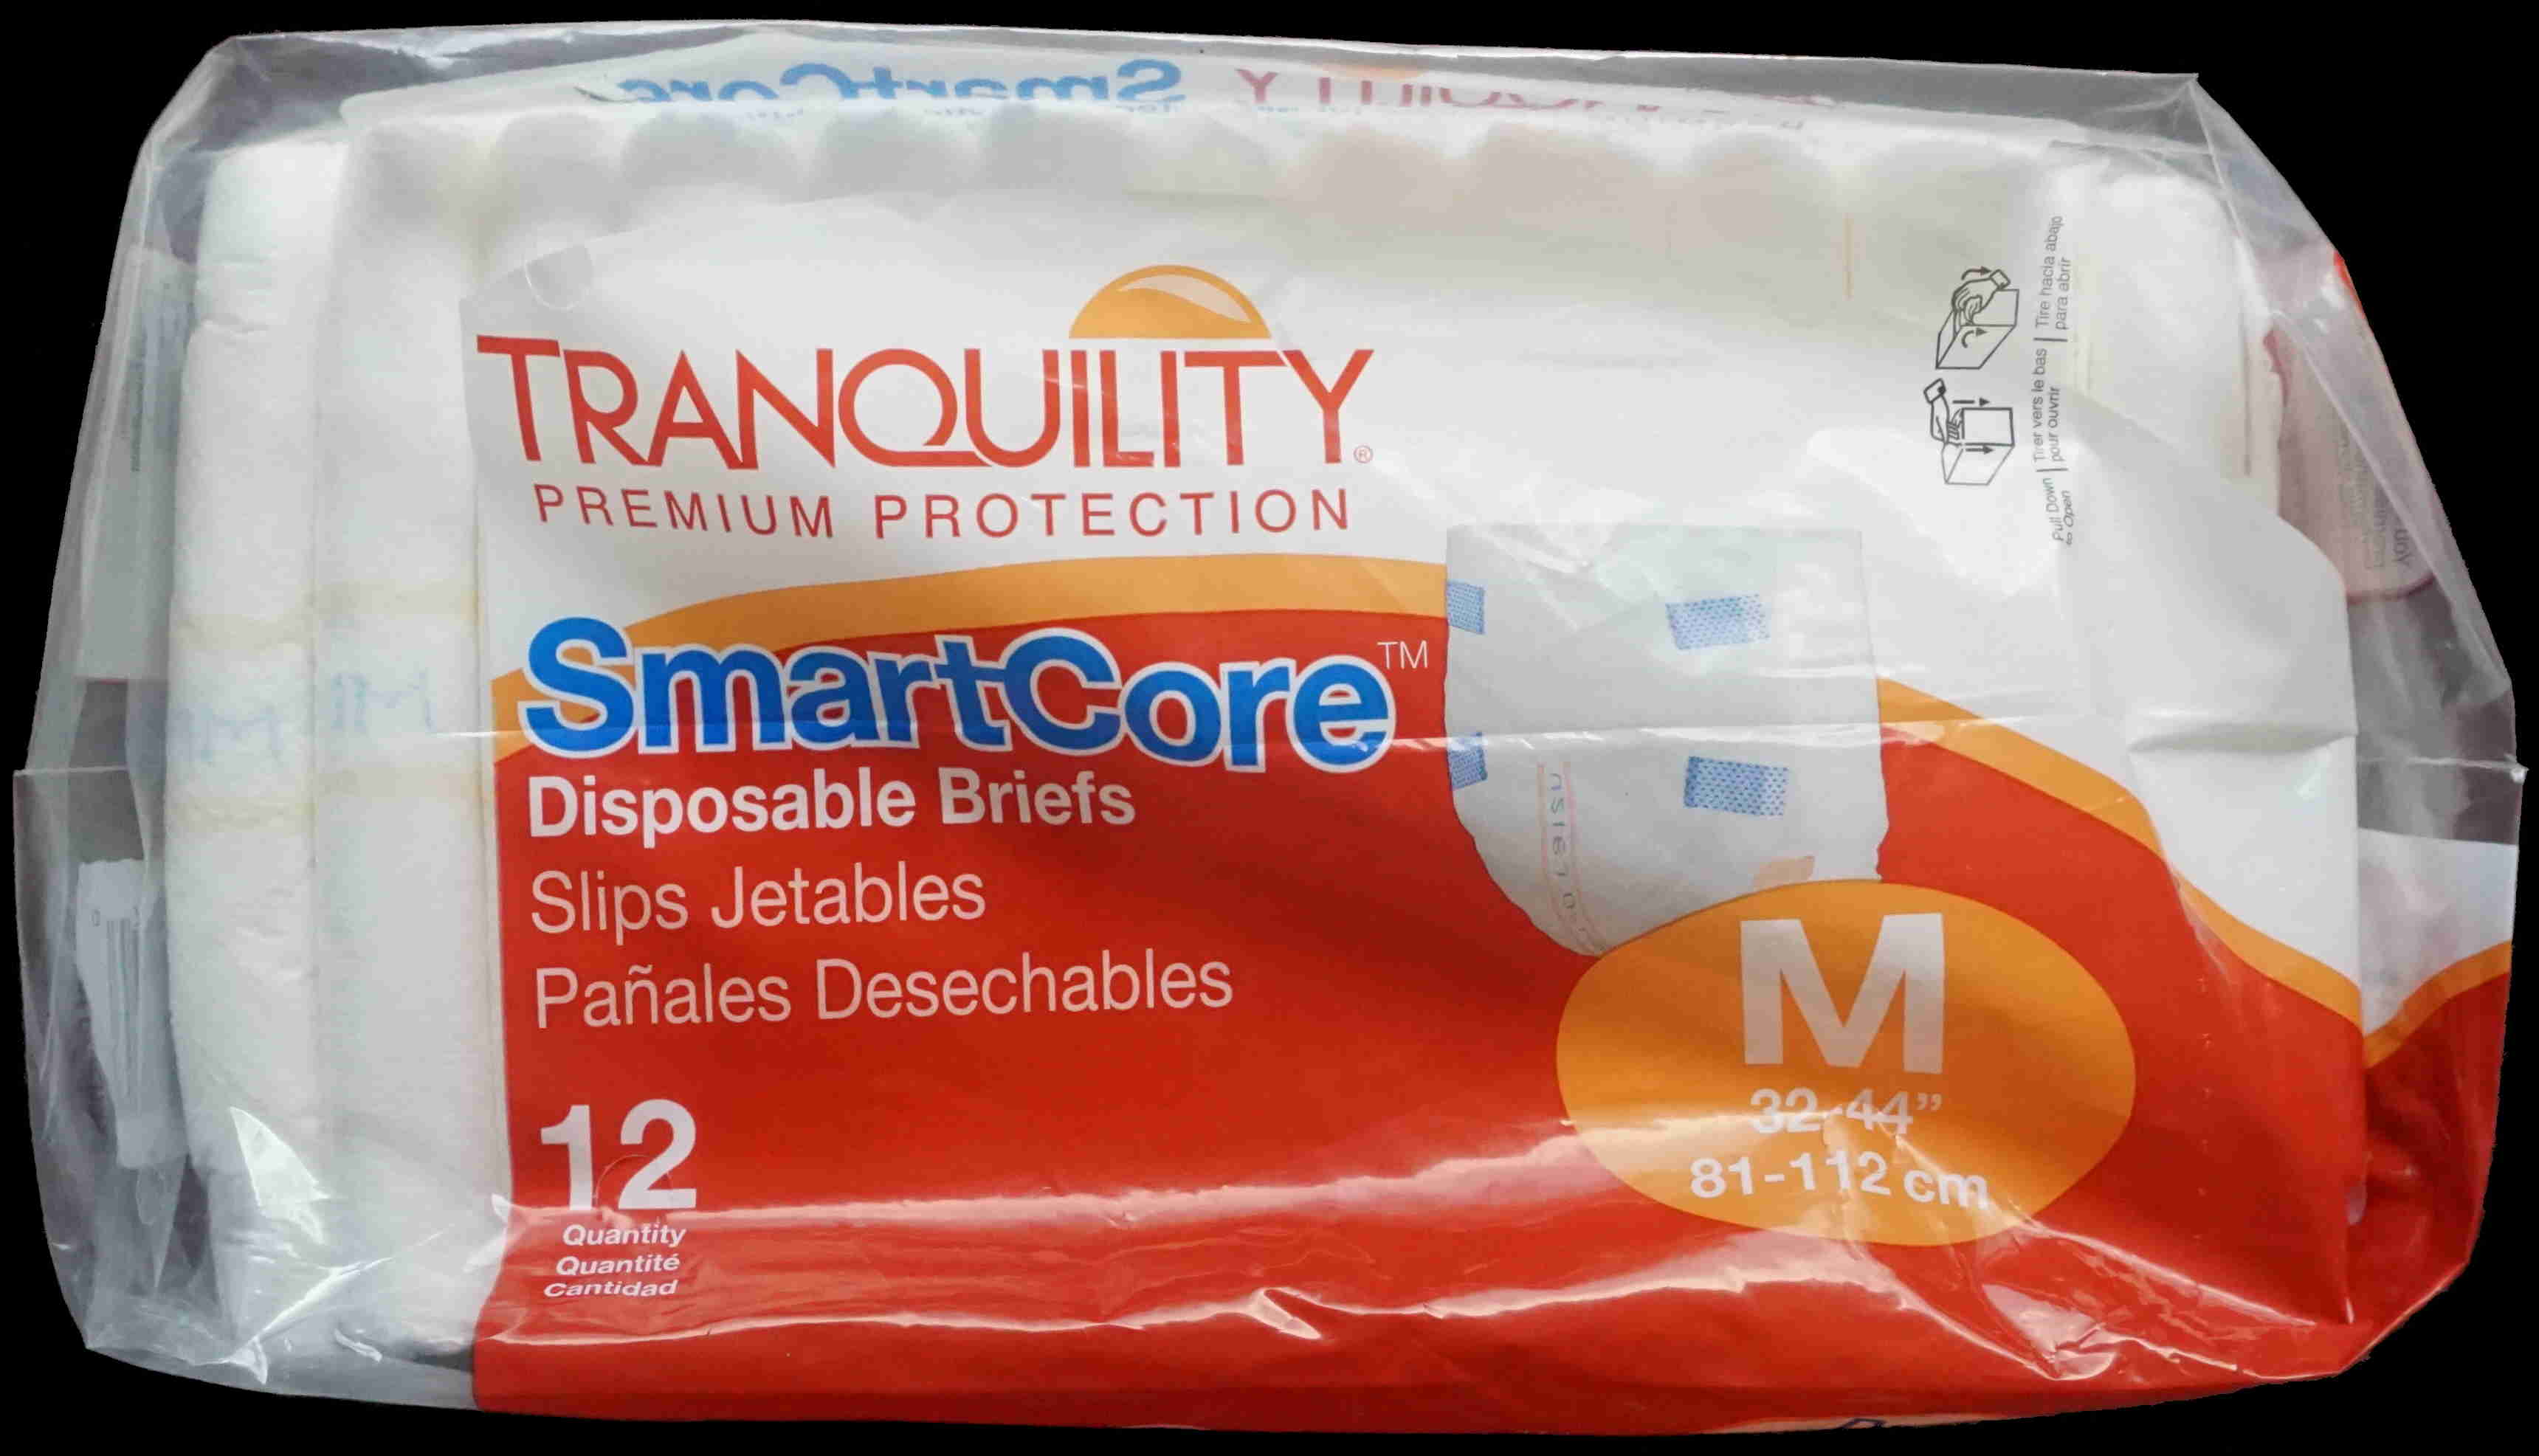 Diaper Metrics: Tranquility Smartcore Adult Diaper Review